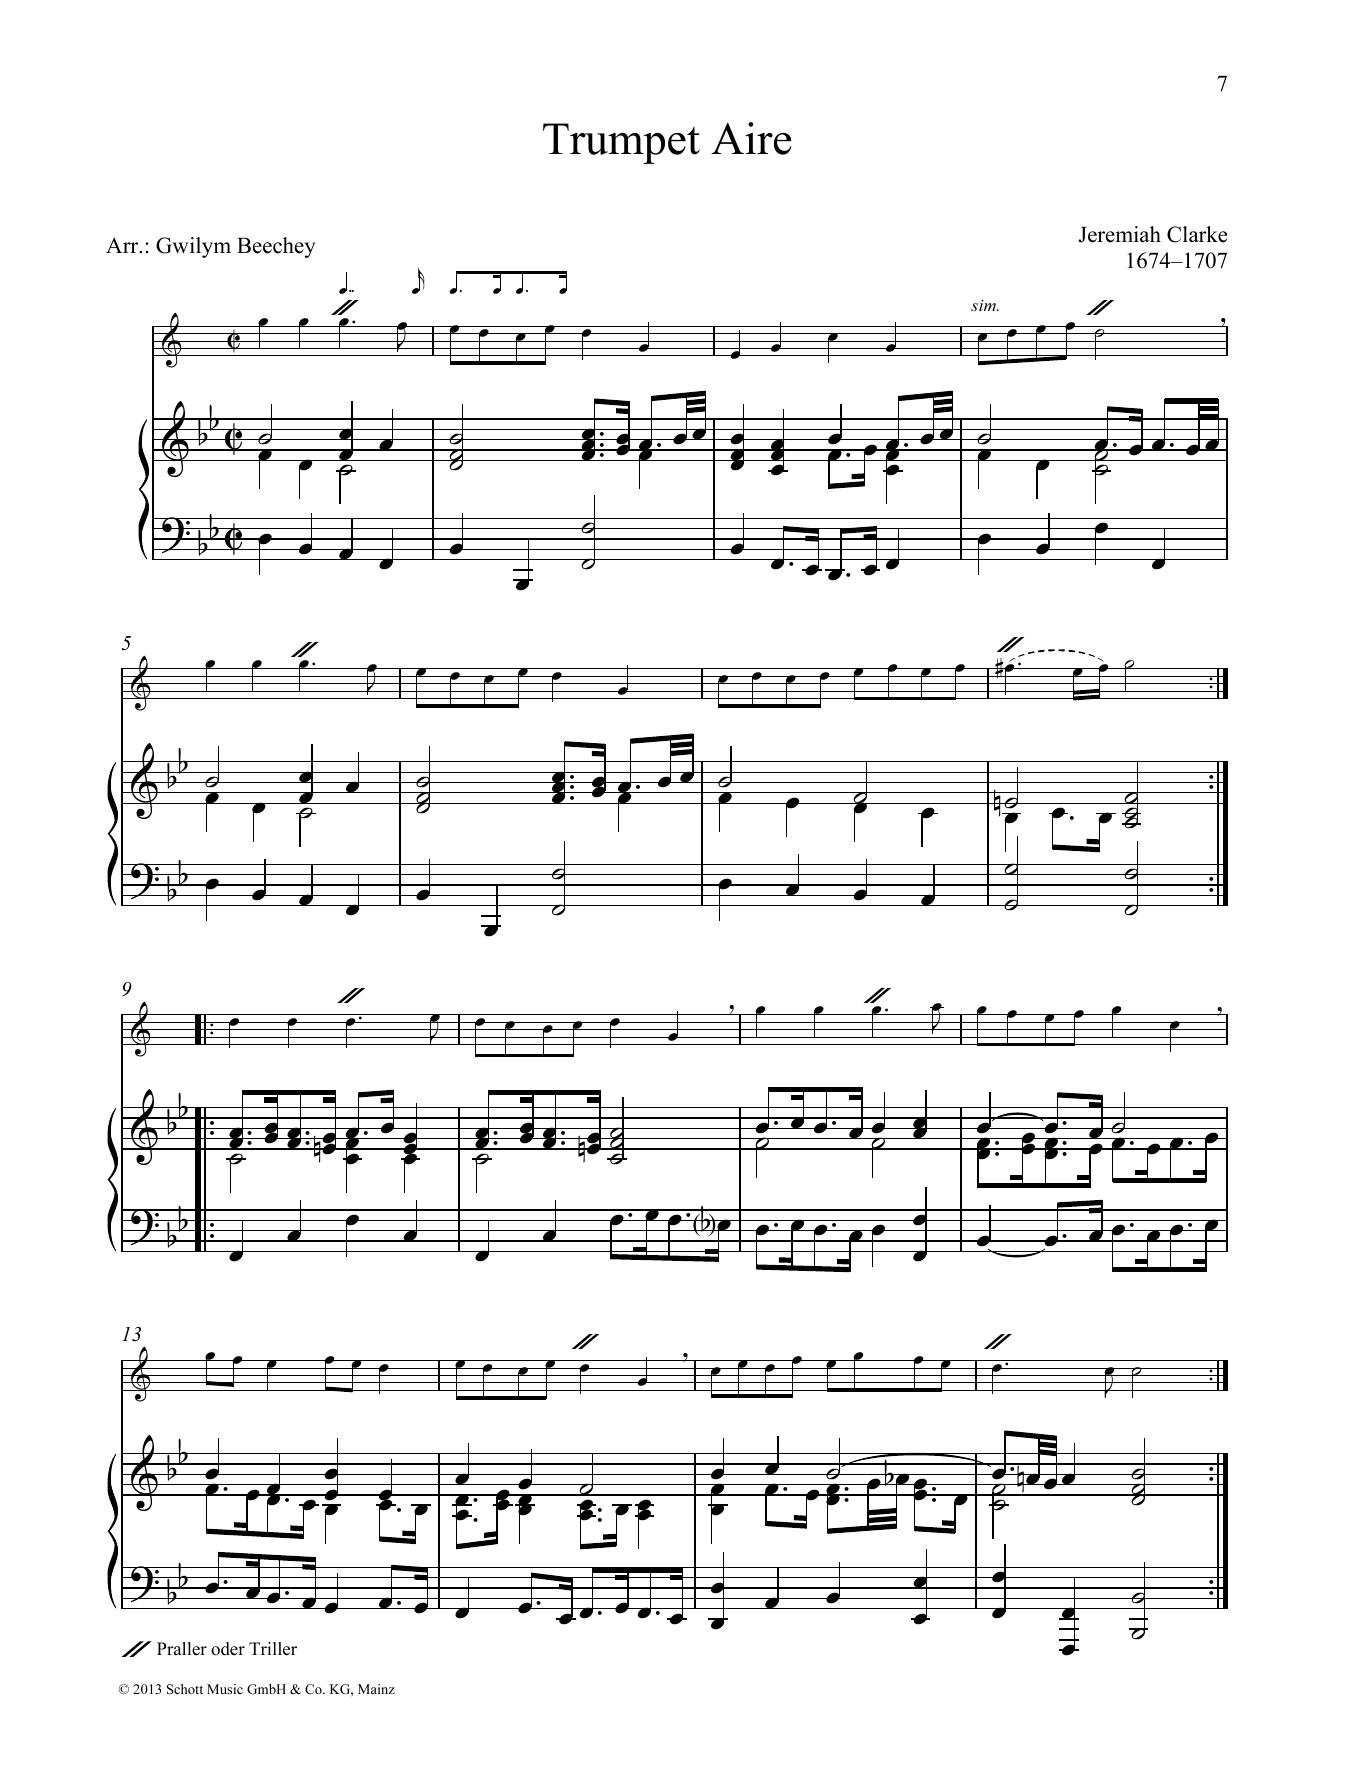 Trumpet Air sheet music